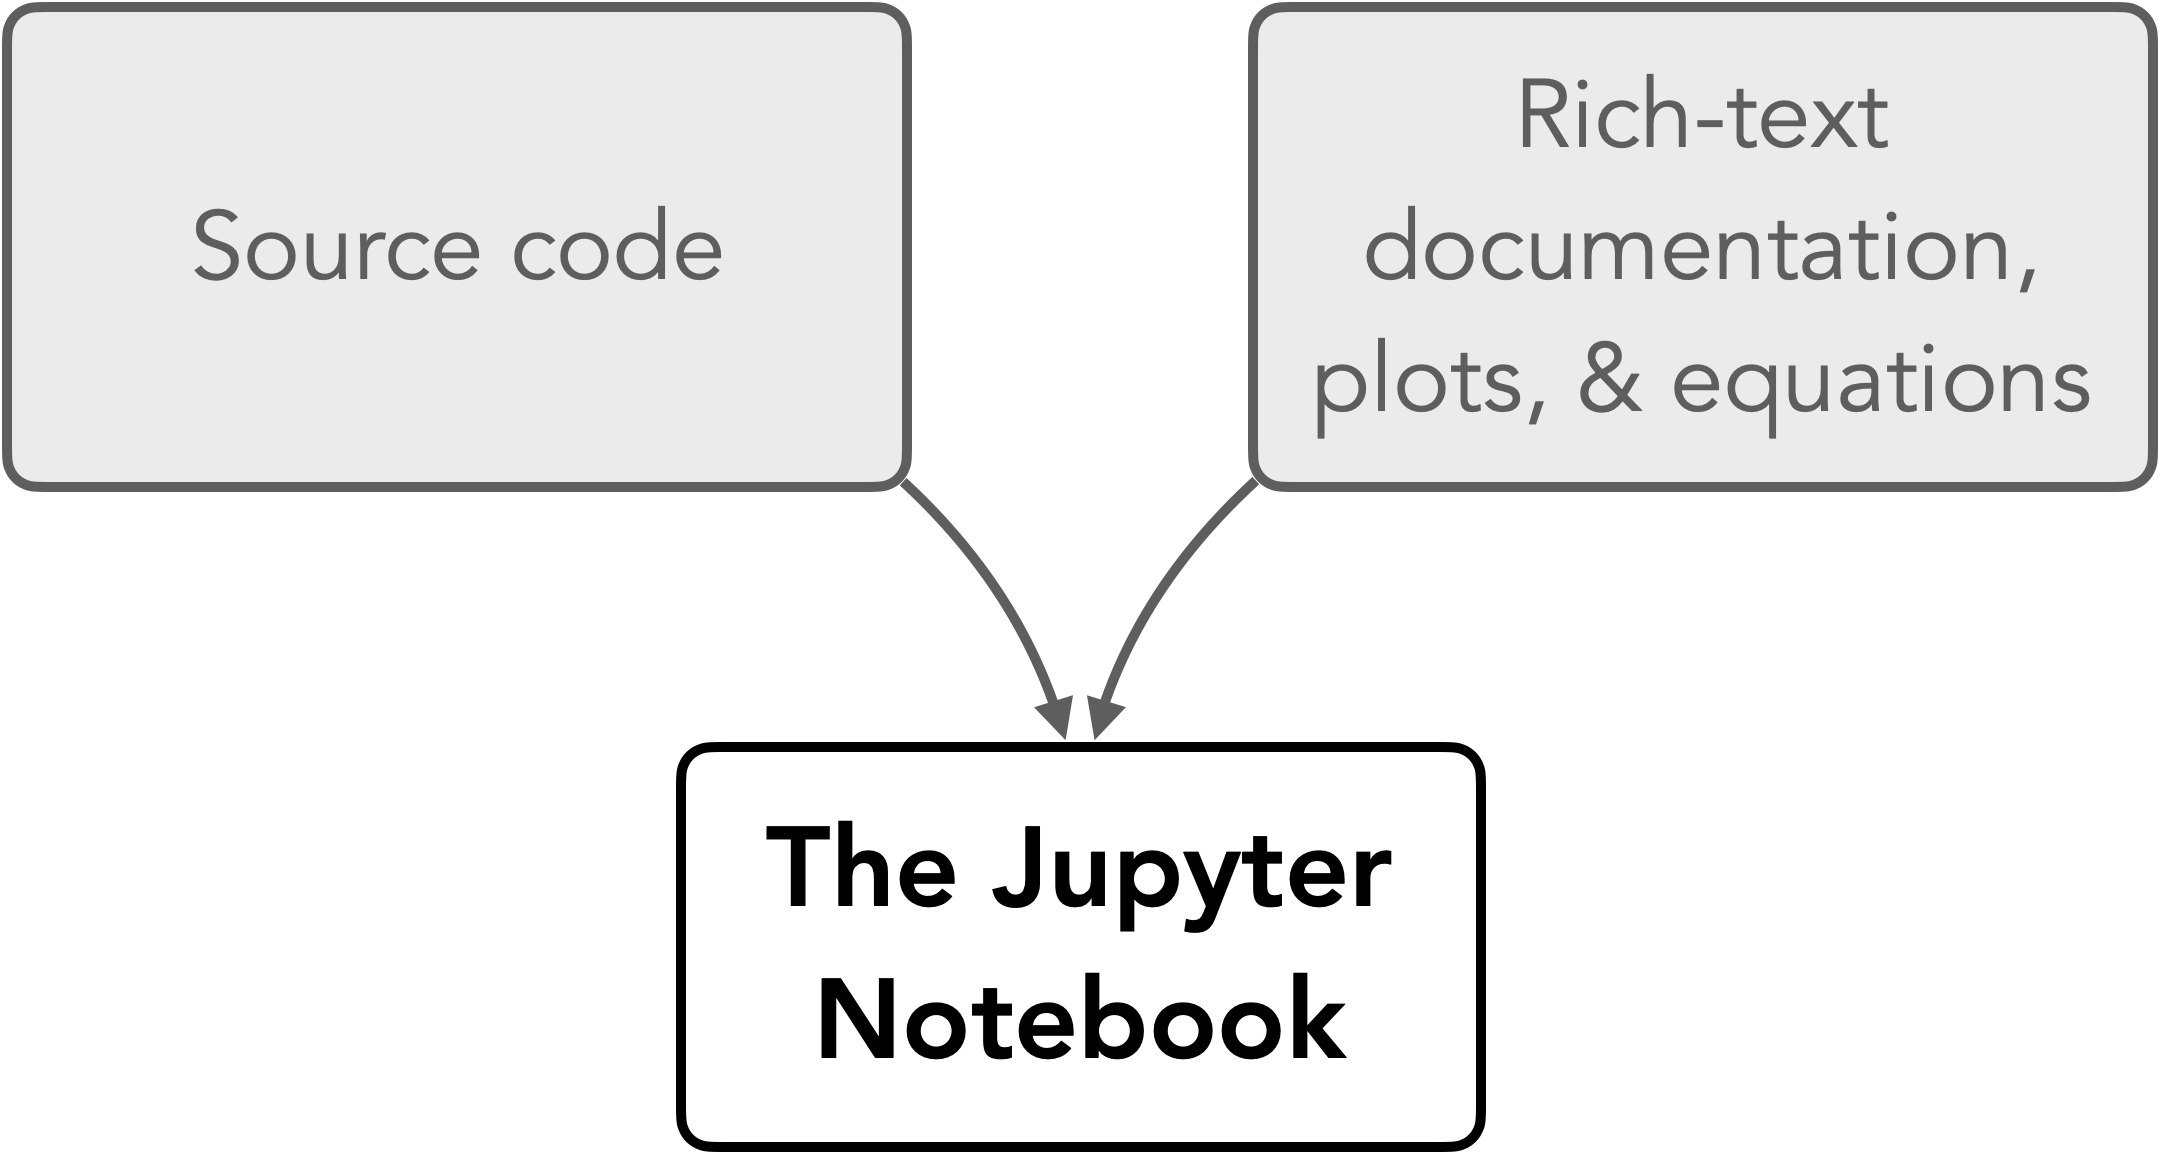 Figure 1.9. Features of a Jupyter Notebook.